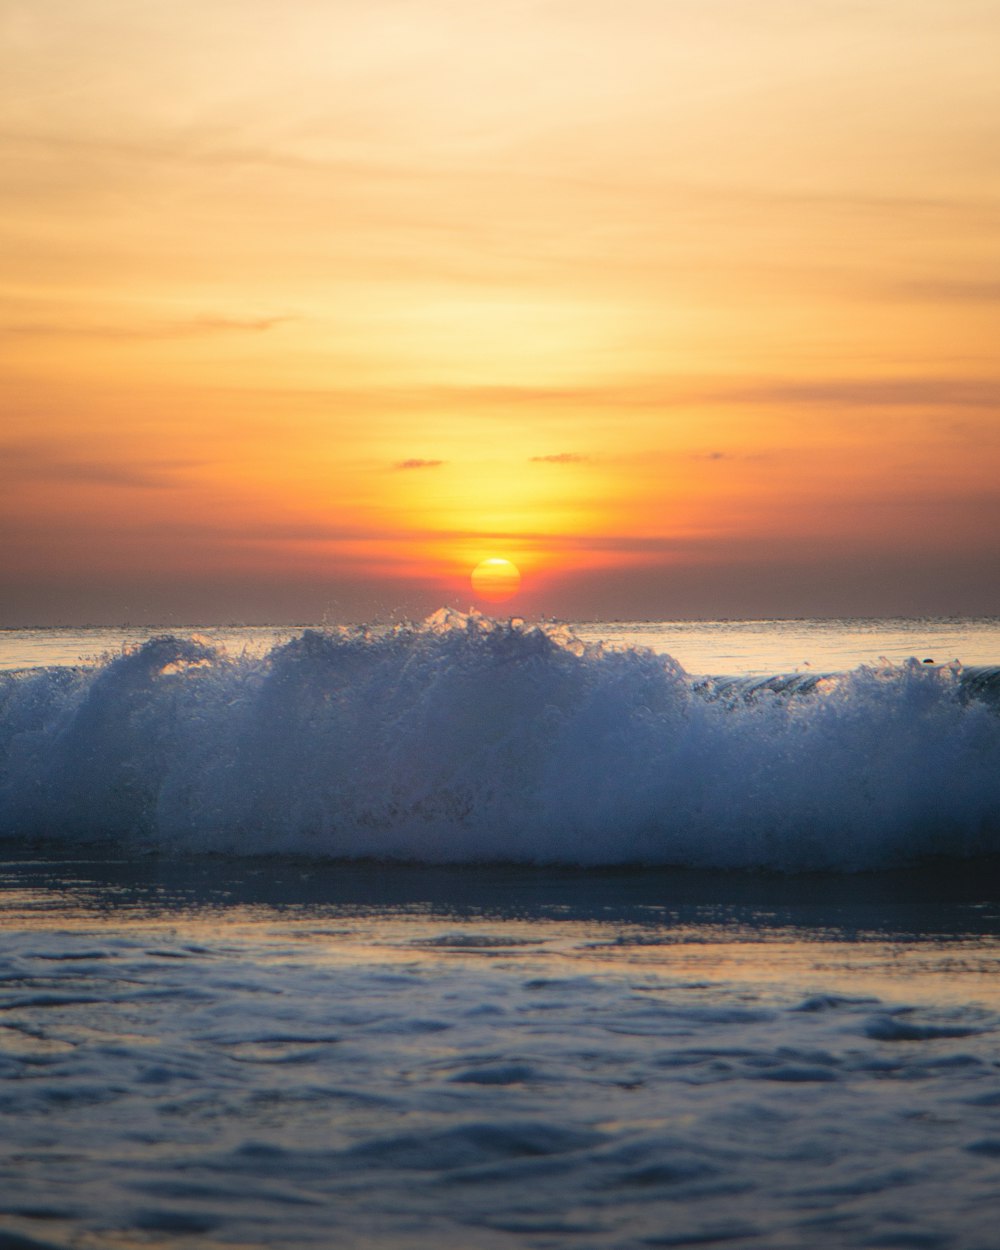 sea waves crashing on shore during sunset